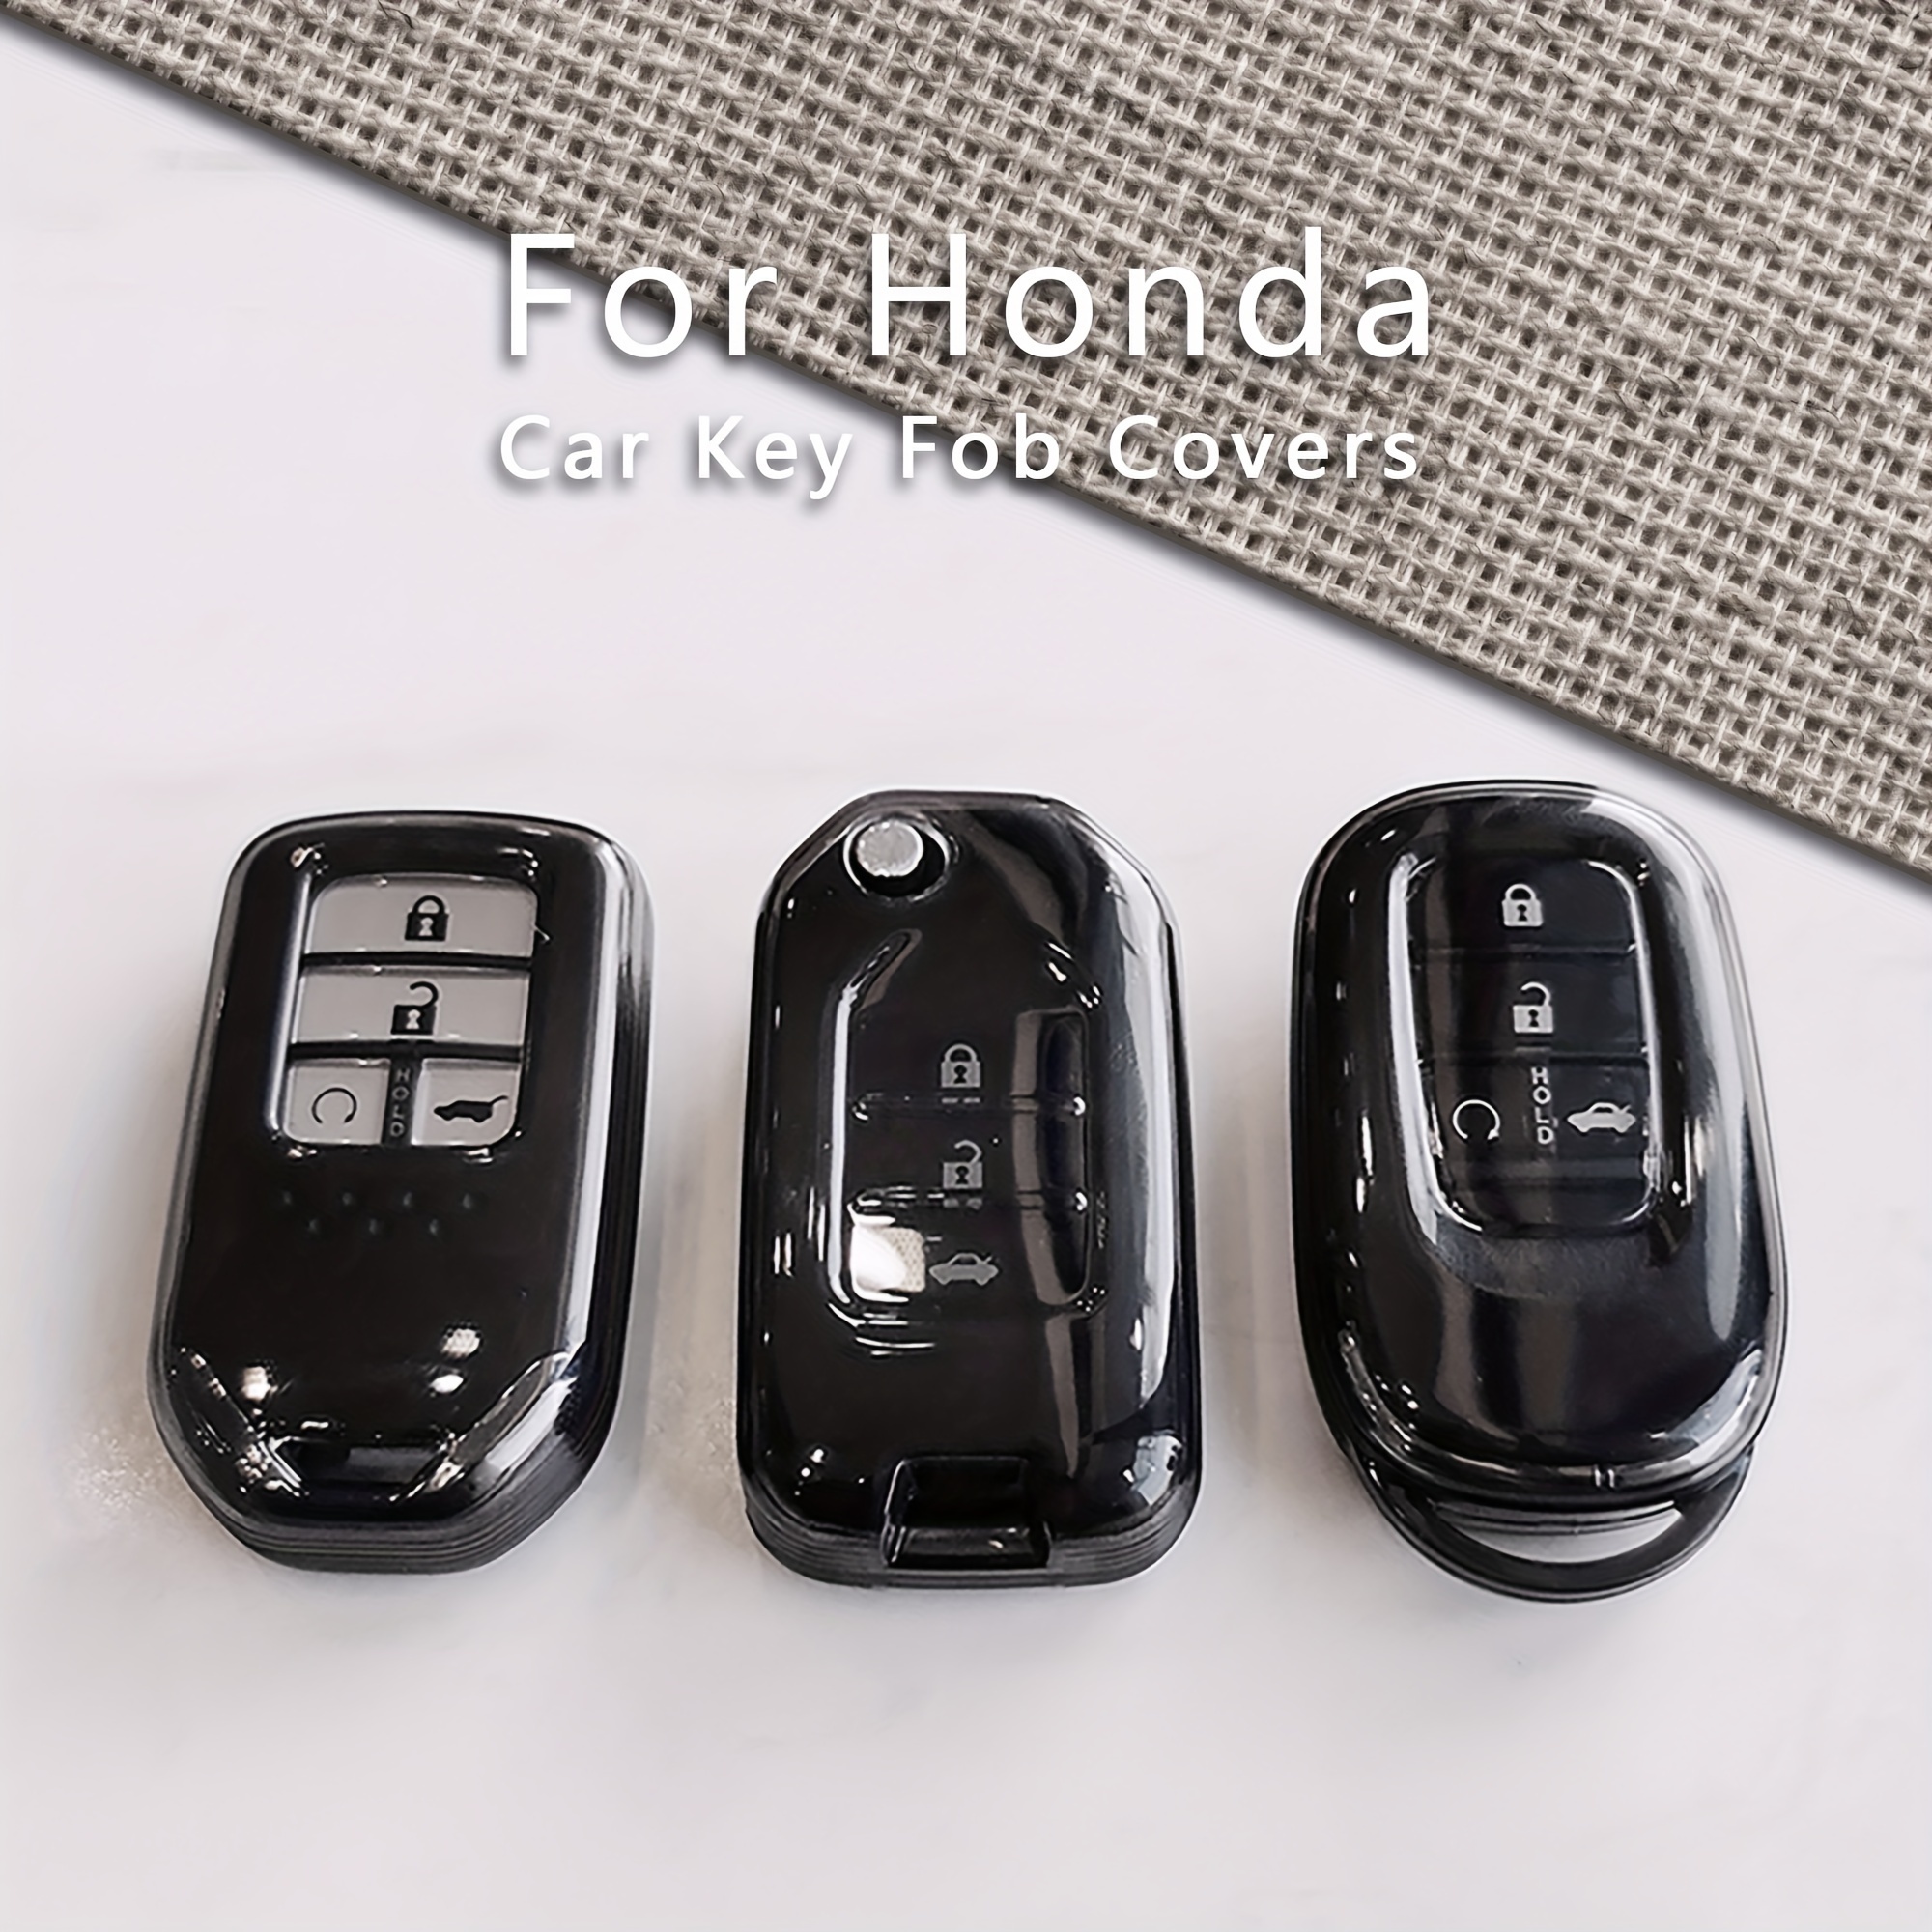 2-Tasten-Autoschlüsselgehäuse aus Silikon für Civic, XR-V, Fit, LIFE